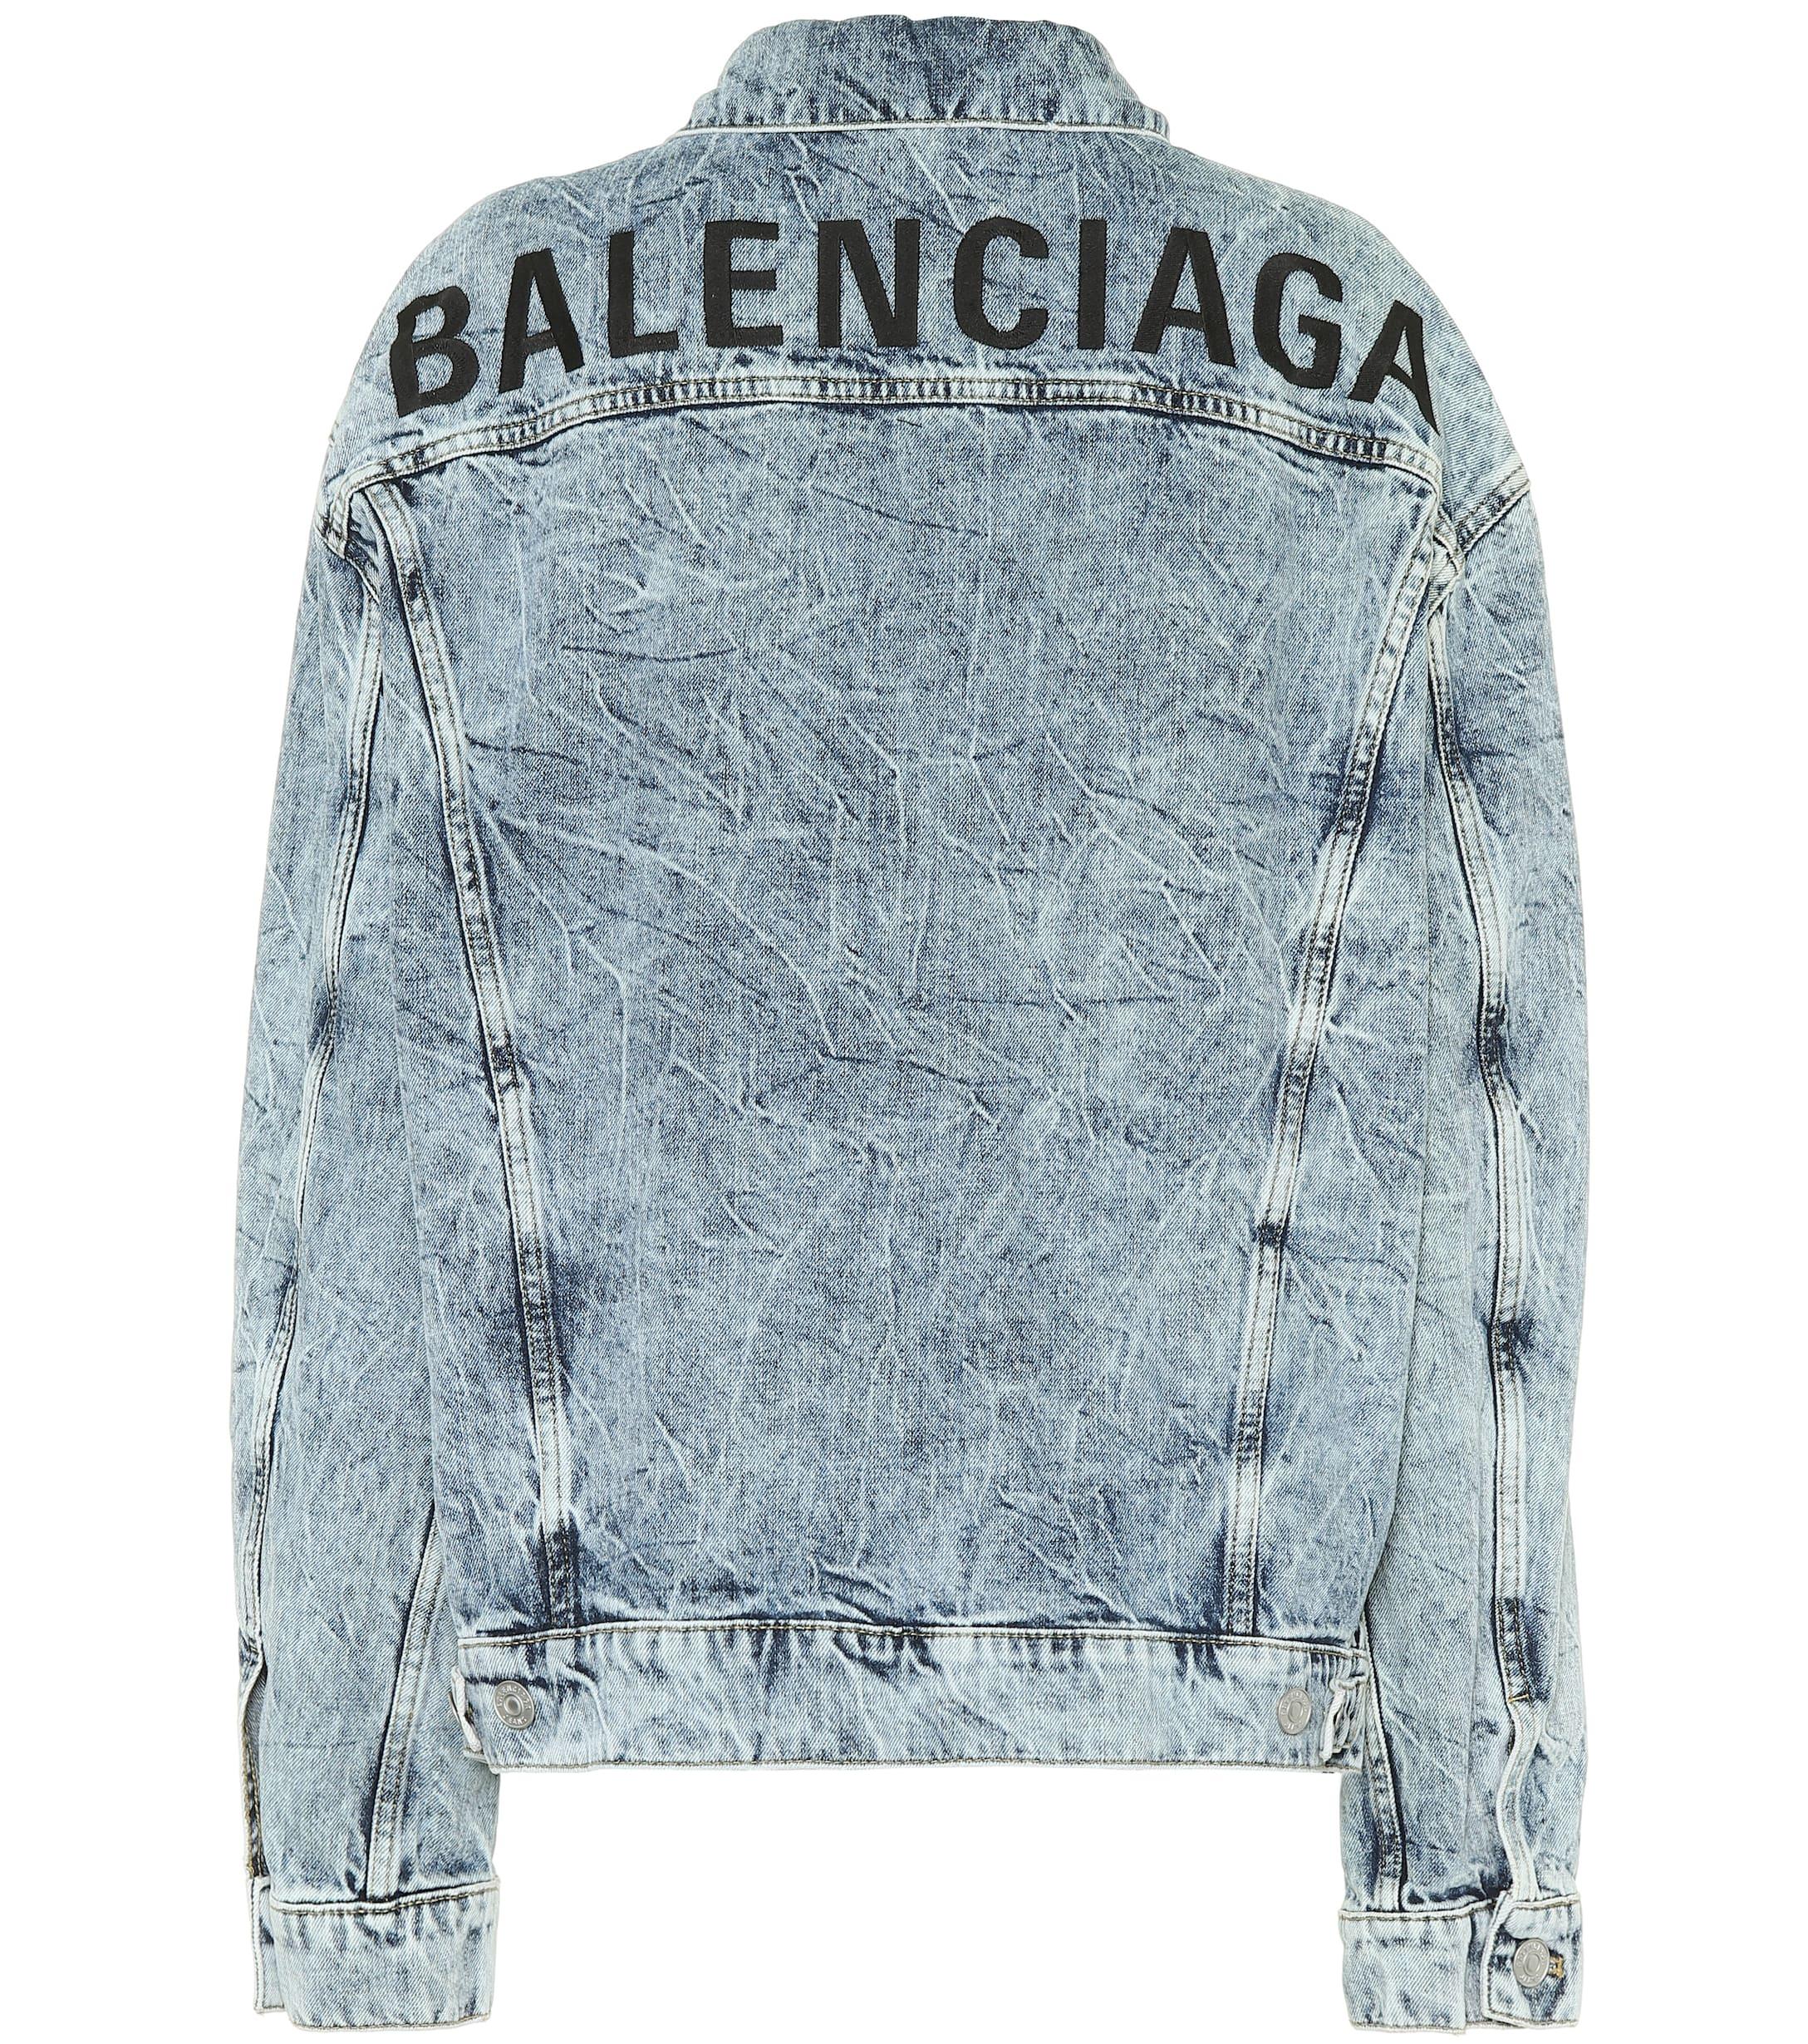 Balenciaga Logo Oversized Denim Jacket in Blue - Lyst